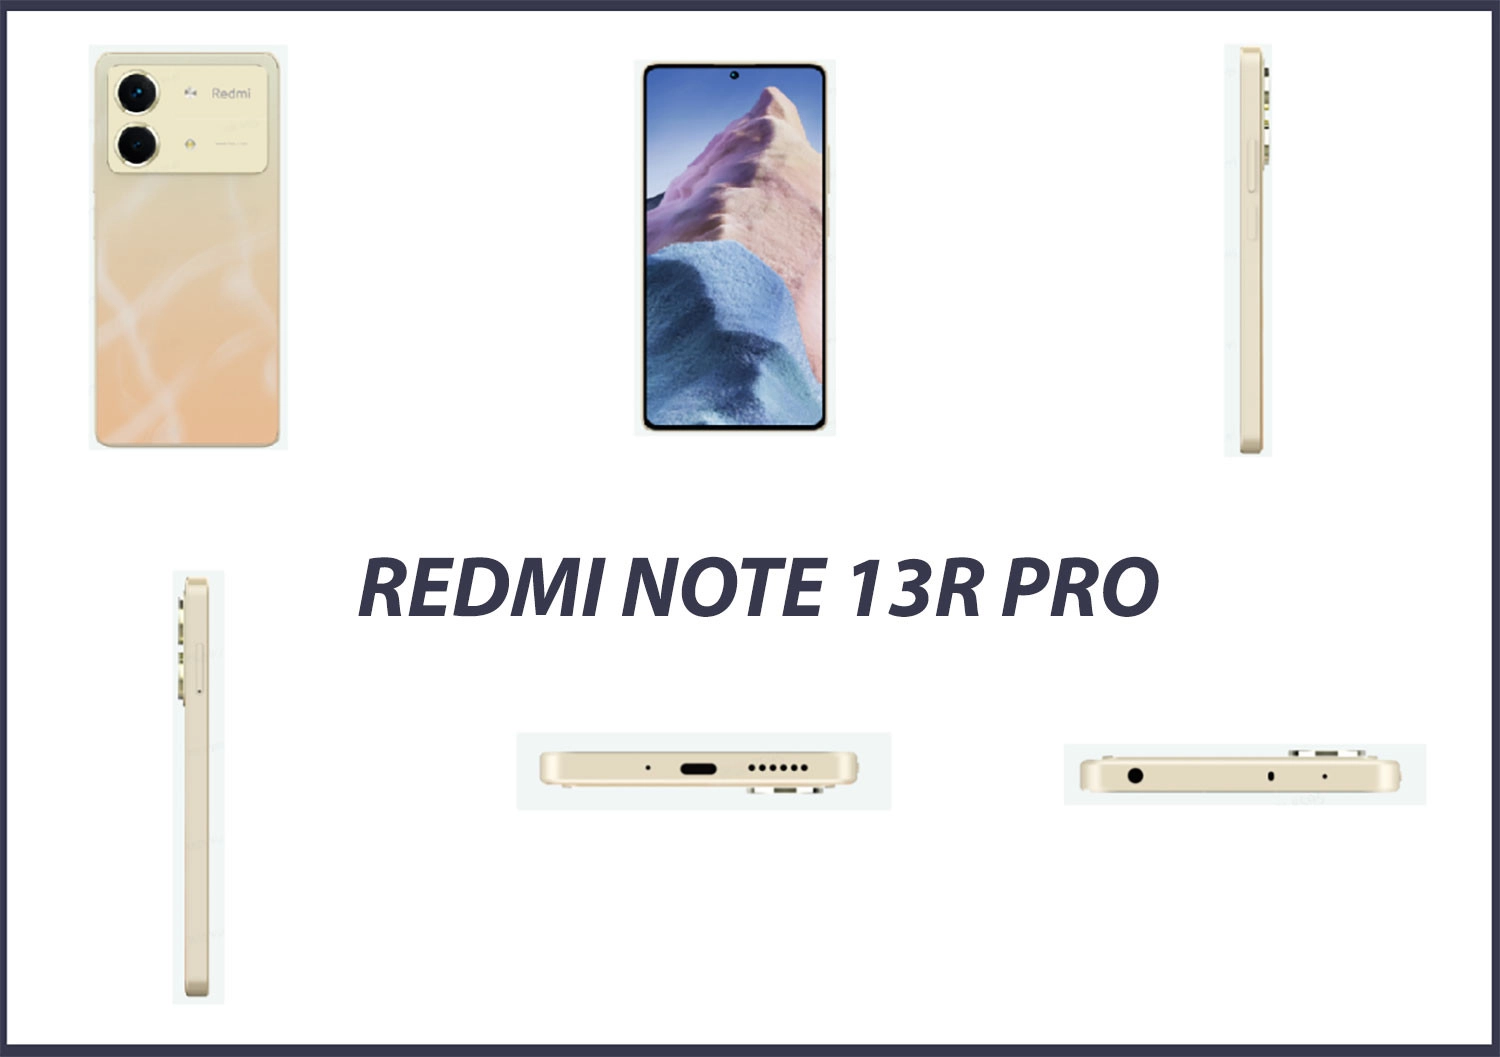  redmi-note13r-pro-ra-matv5